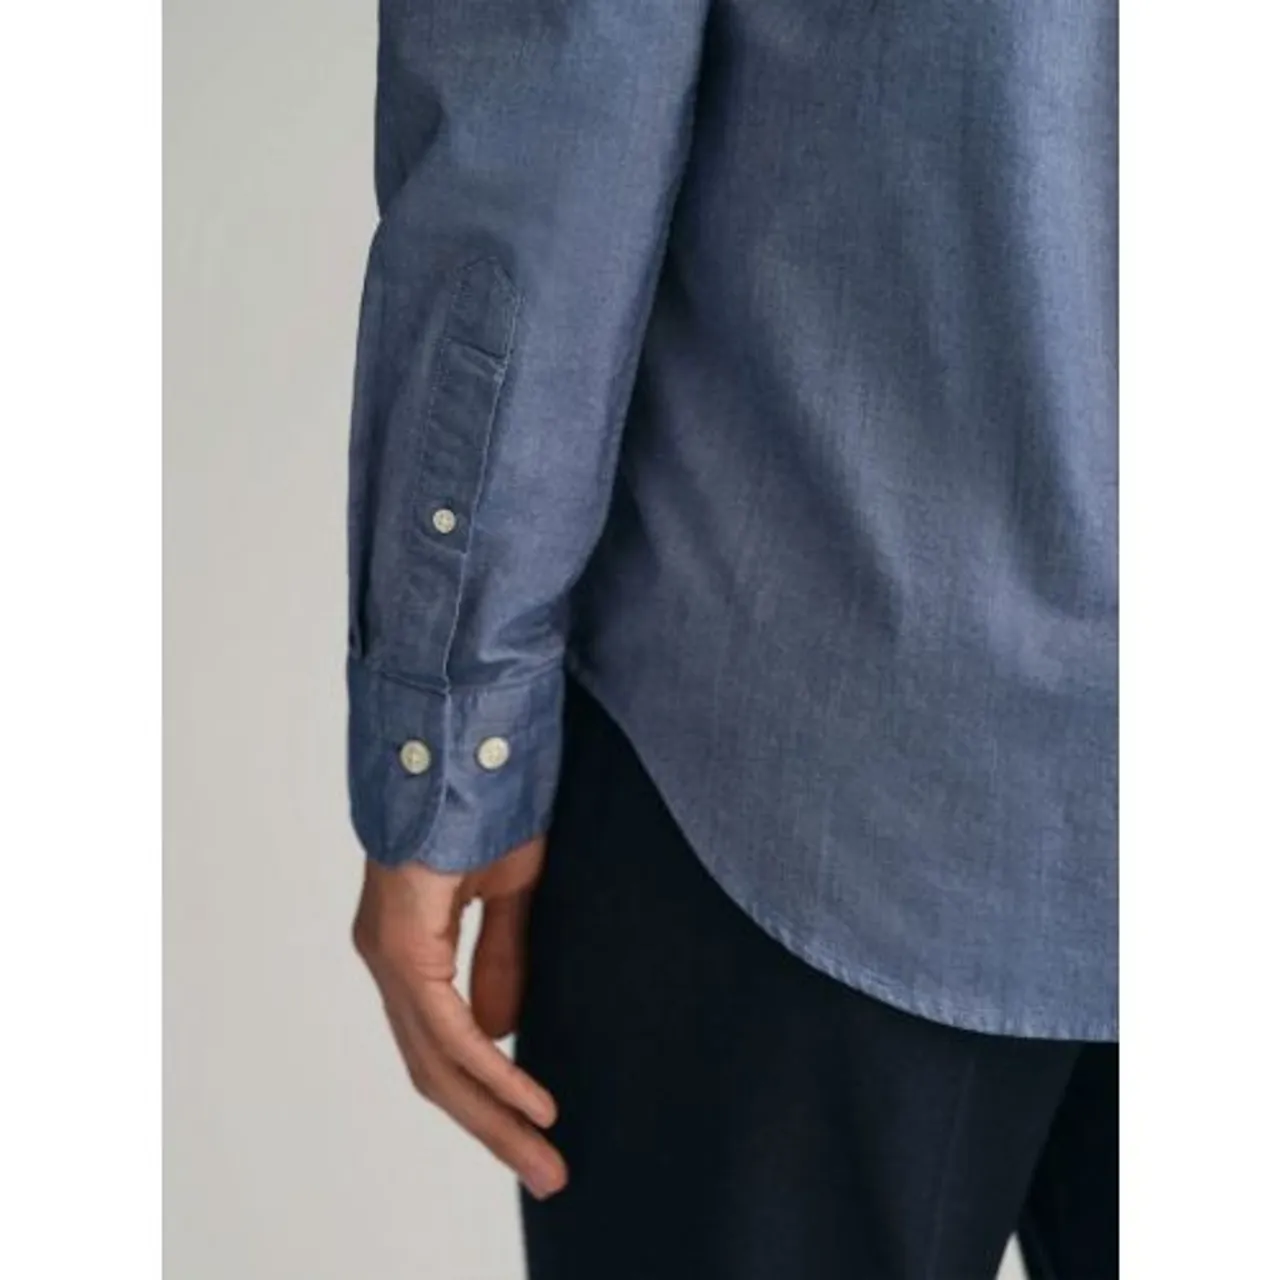 GANT Mens Persian Blue Regular Fit Oxford Shirt